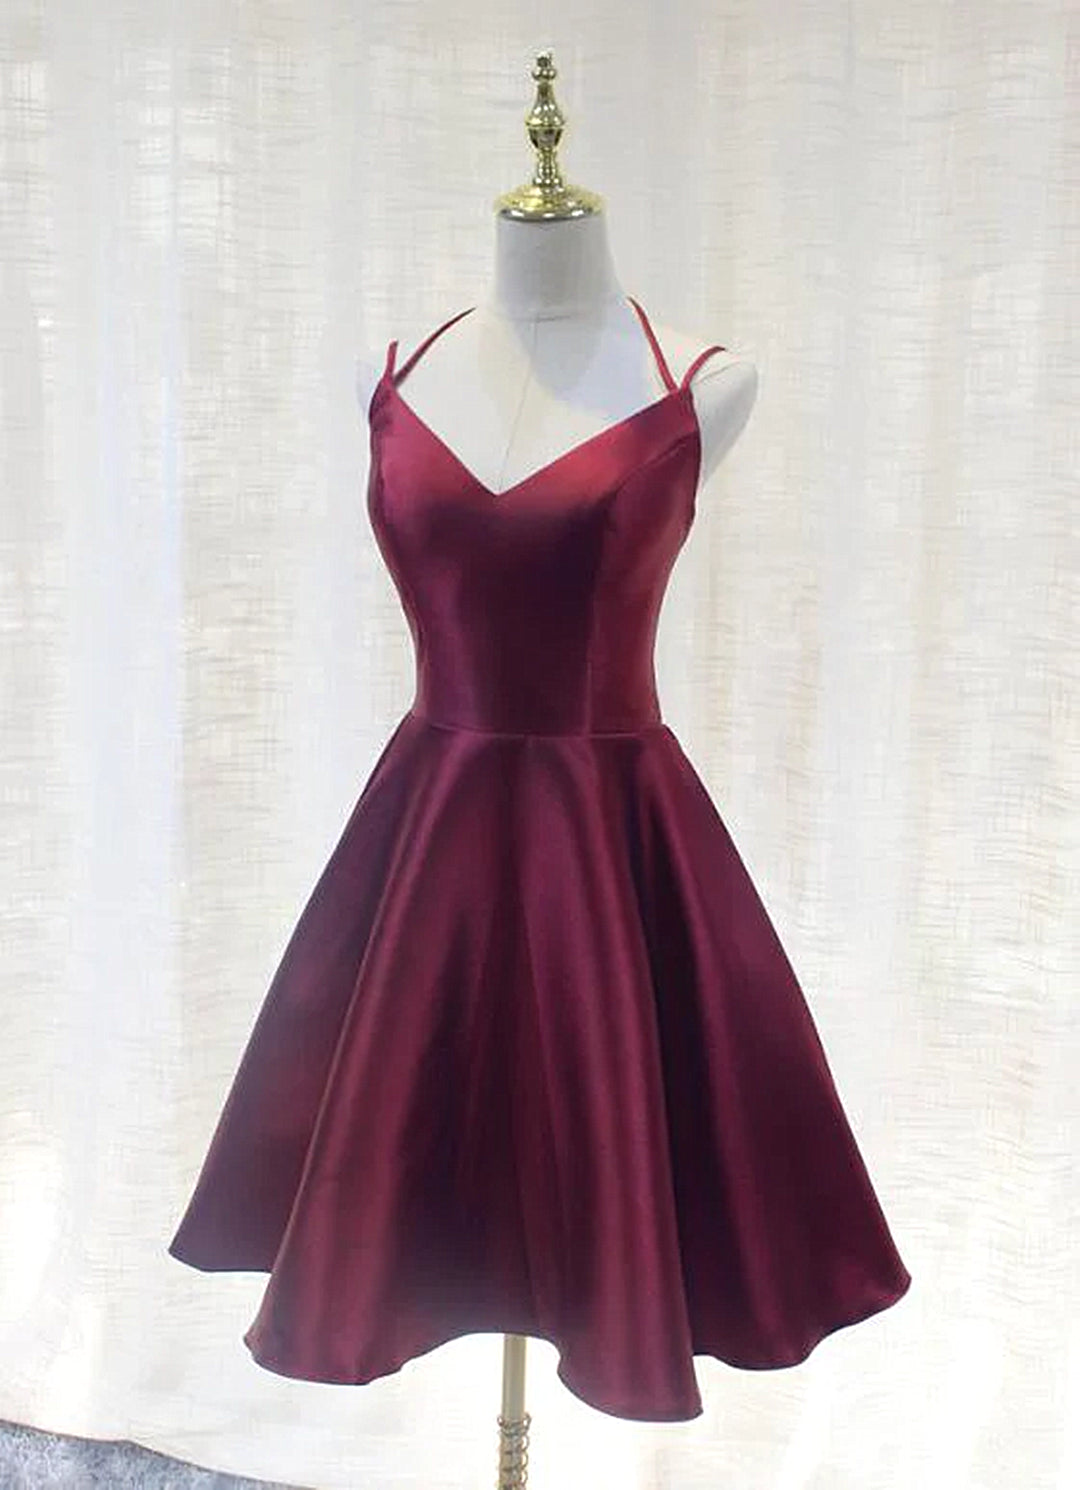 Burgundy Straps V-neckline Short Party Dress Outfits For Women , Lovely Satin Homecoming Dress